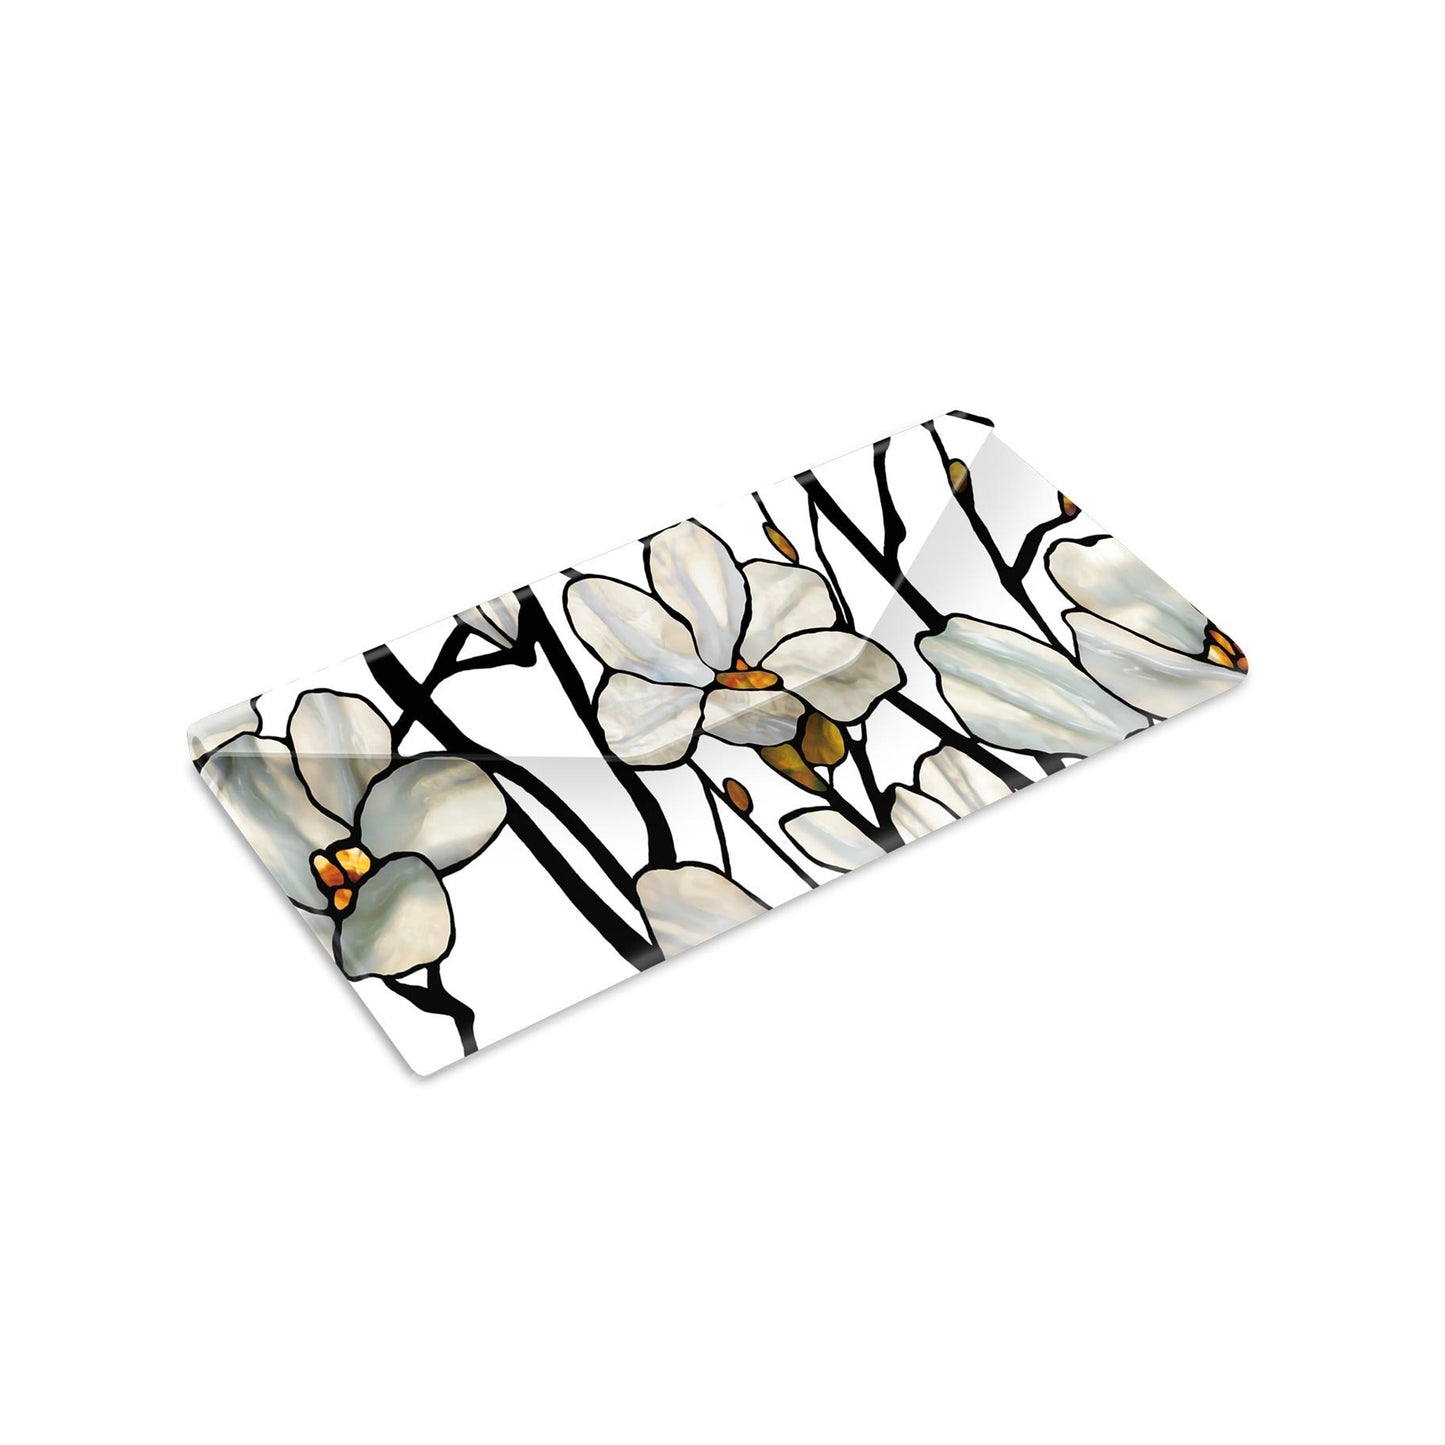 Tiffany "Magnolia" Eyeglasses Case + Microfiber Lens Cloth